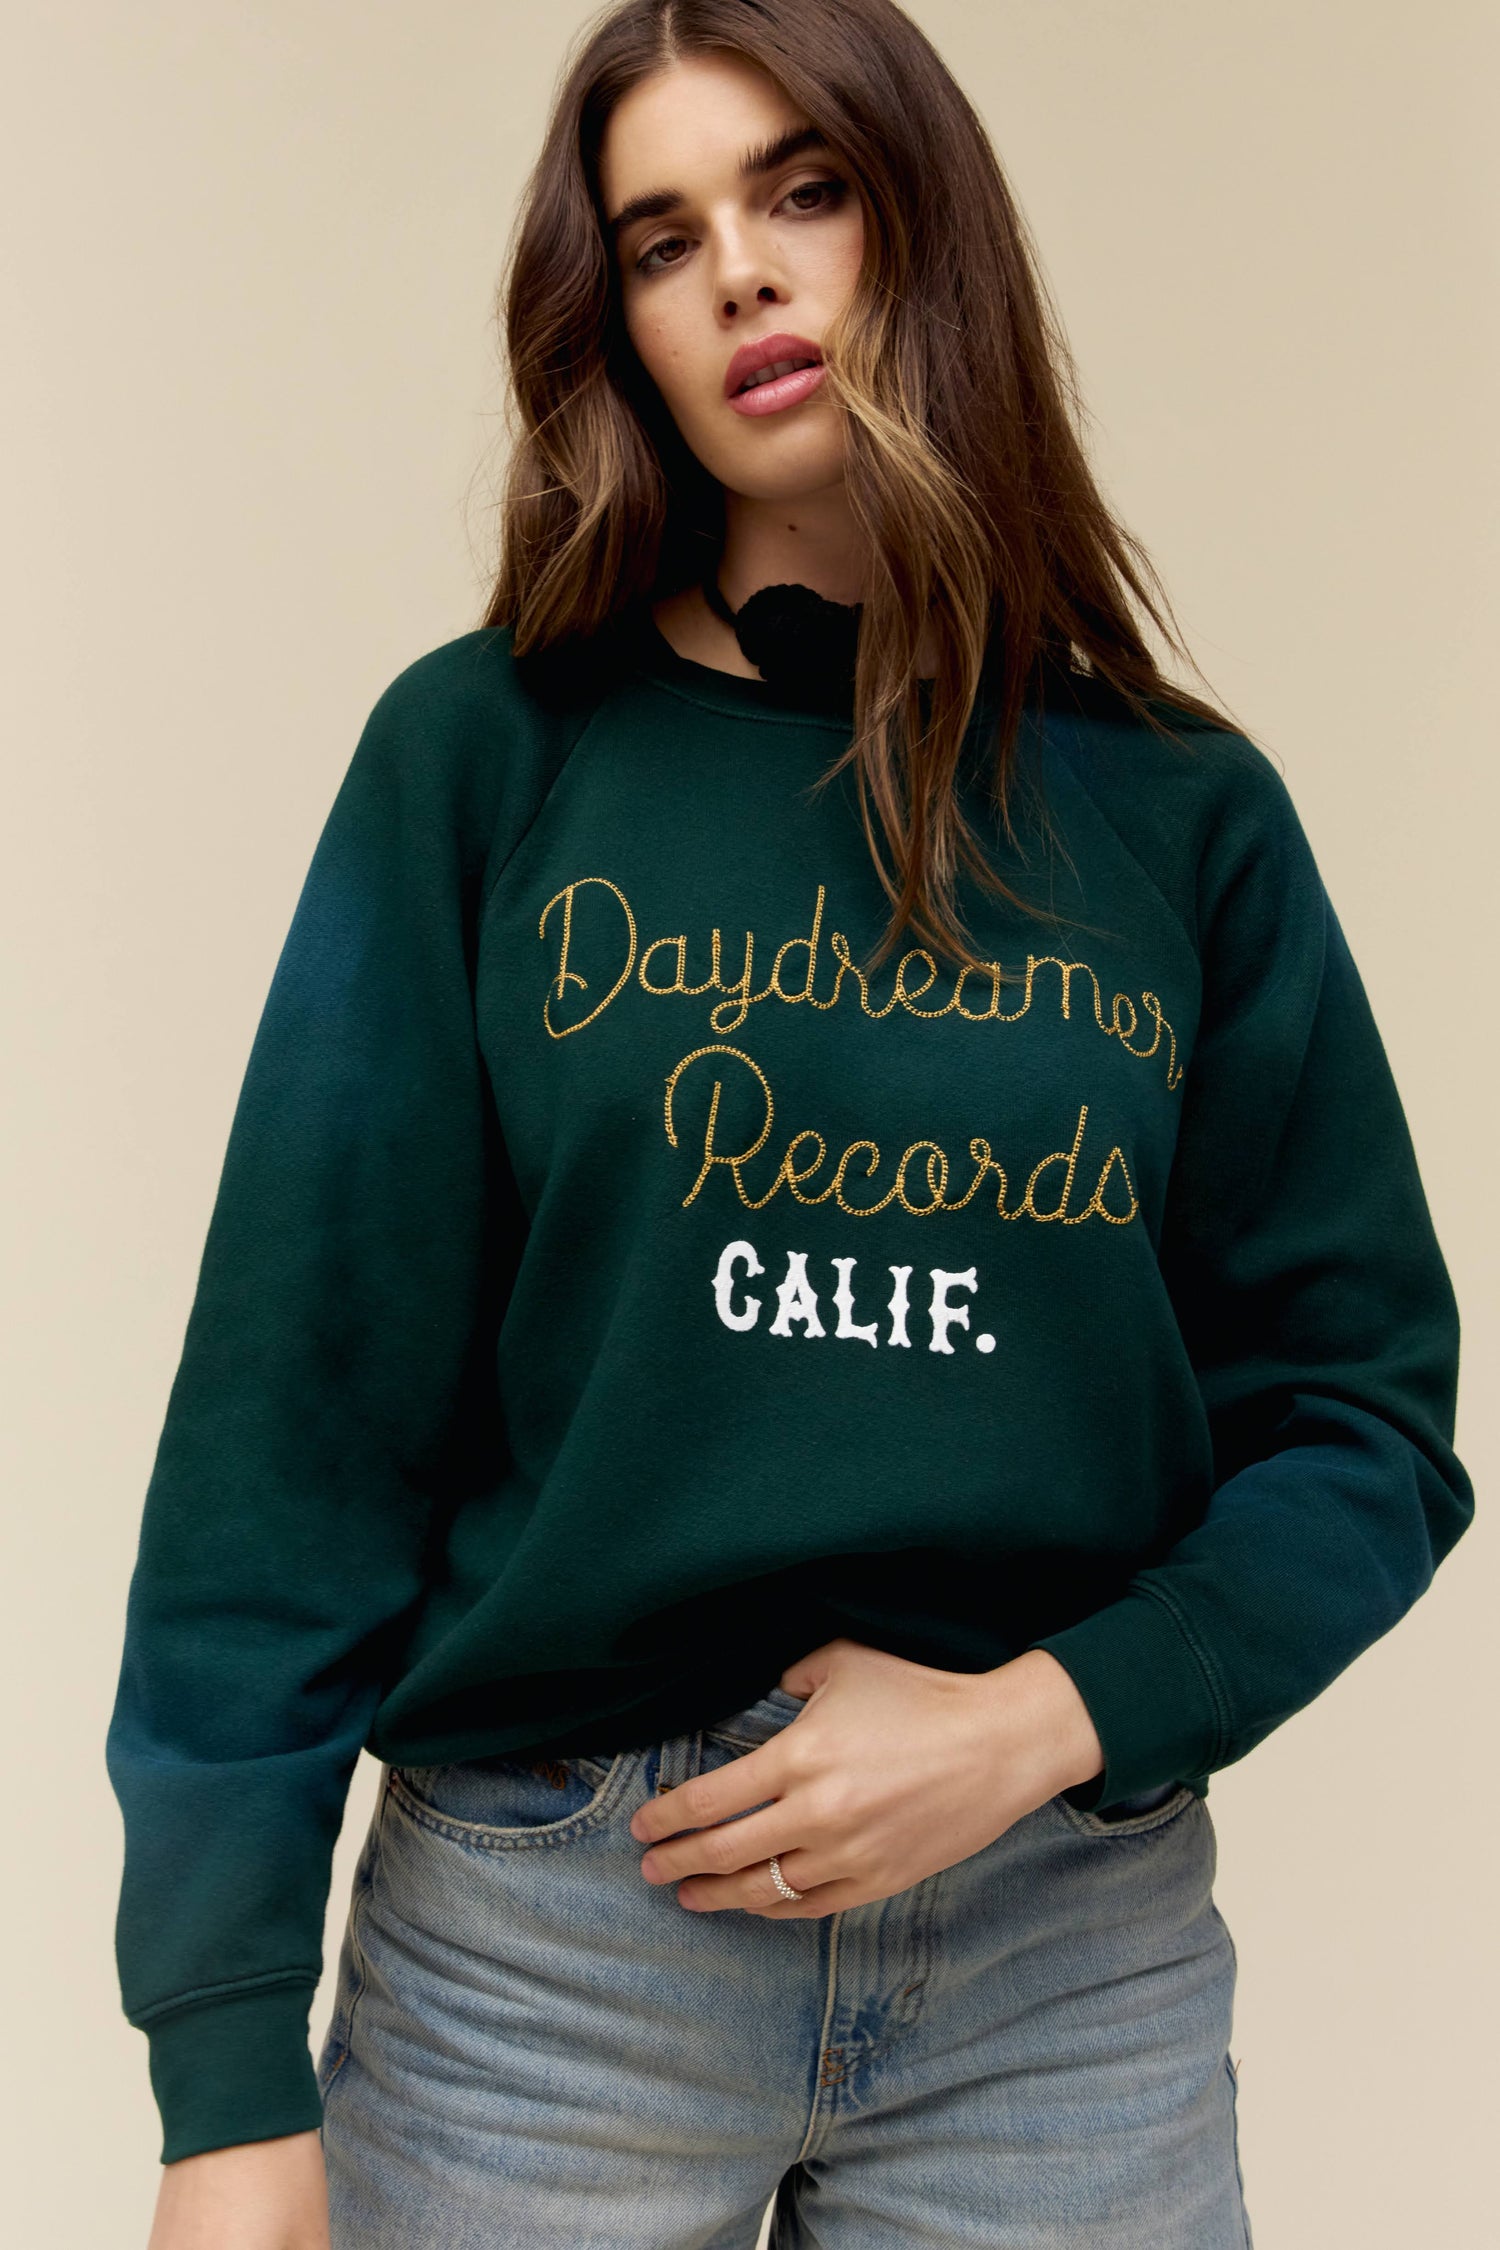 Daydreamer Records Rope Vintage Sweatshirt, XS